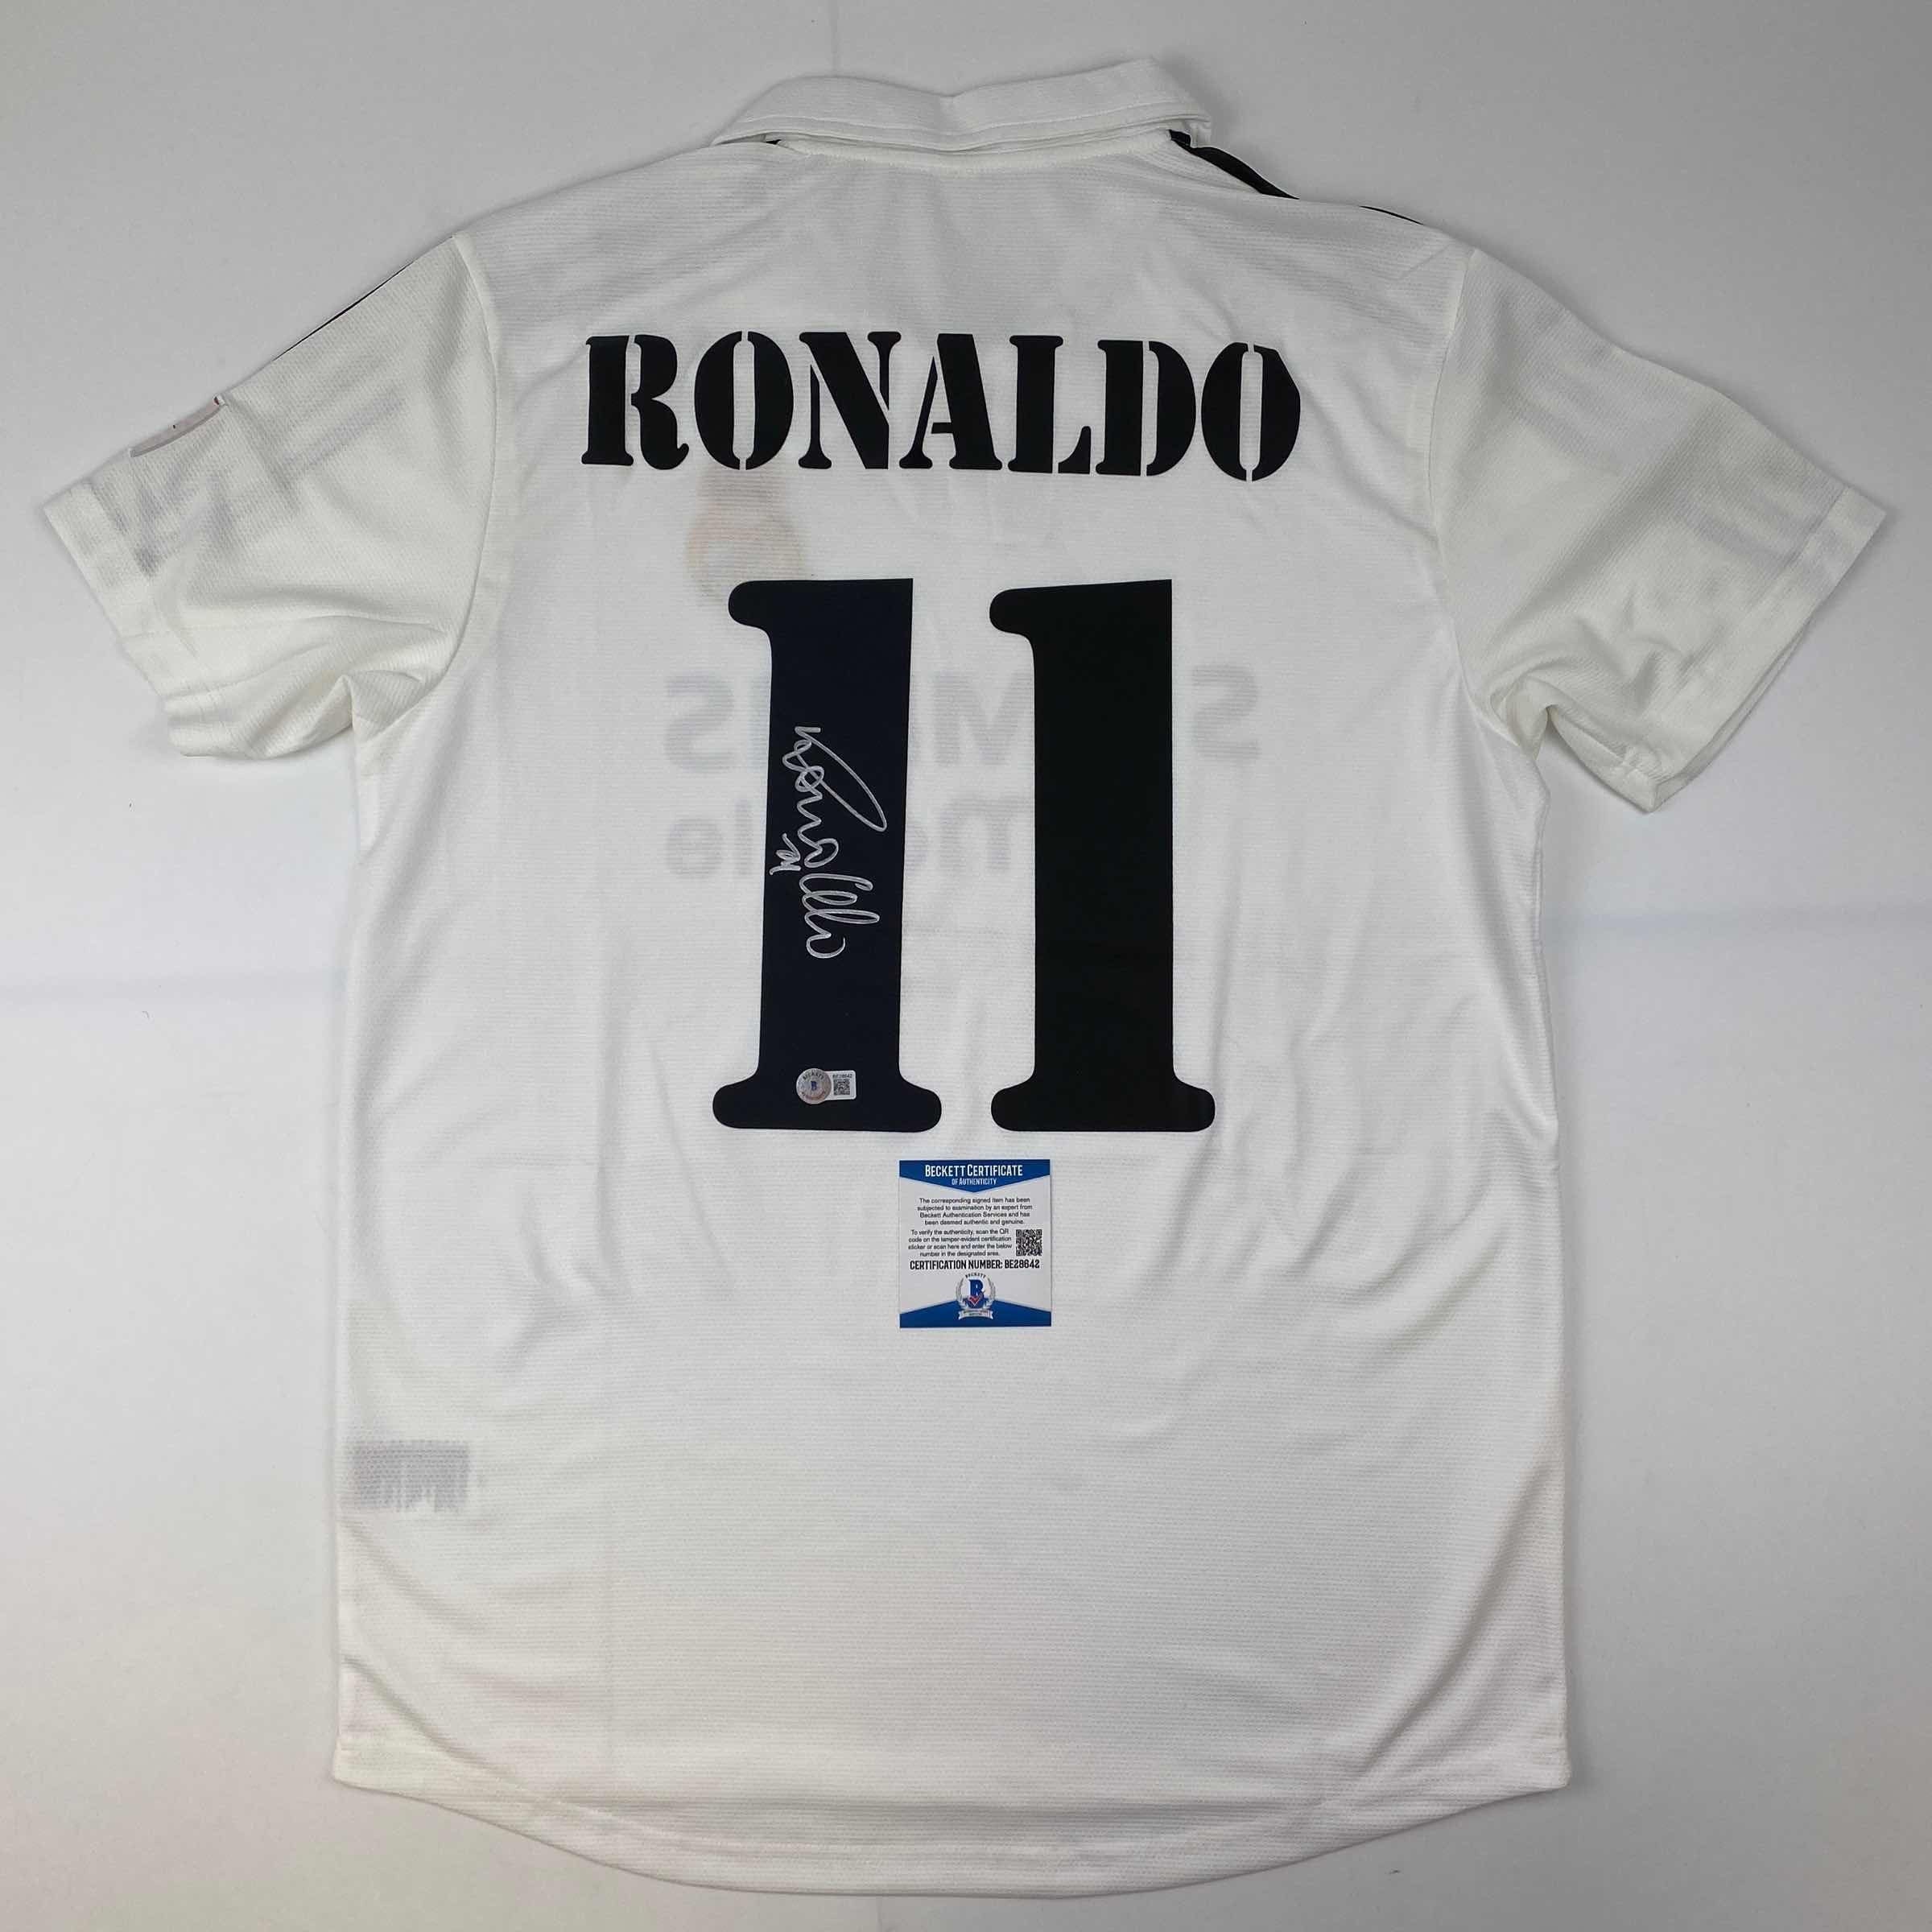 Ronaldo Signed Jersey Etsy